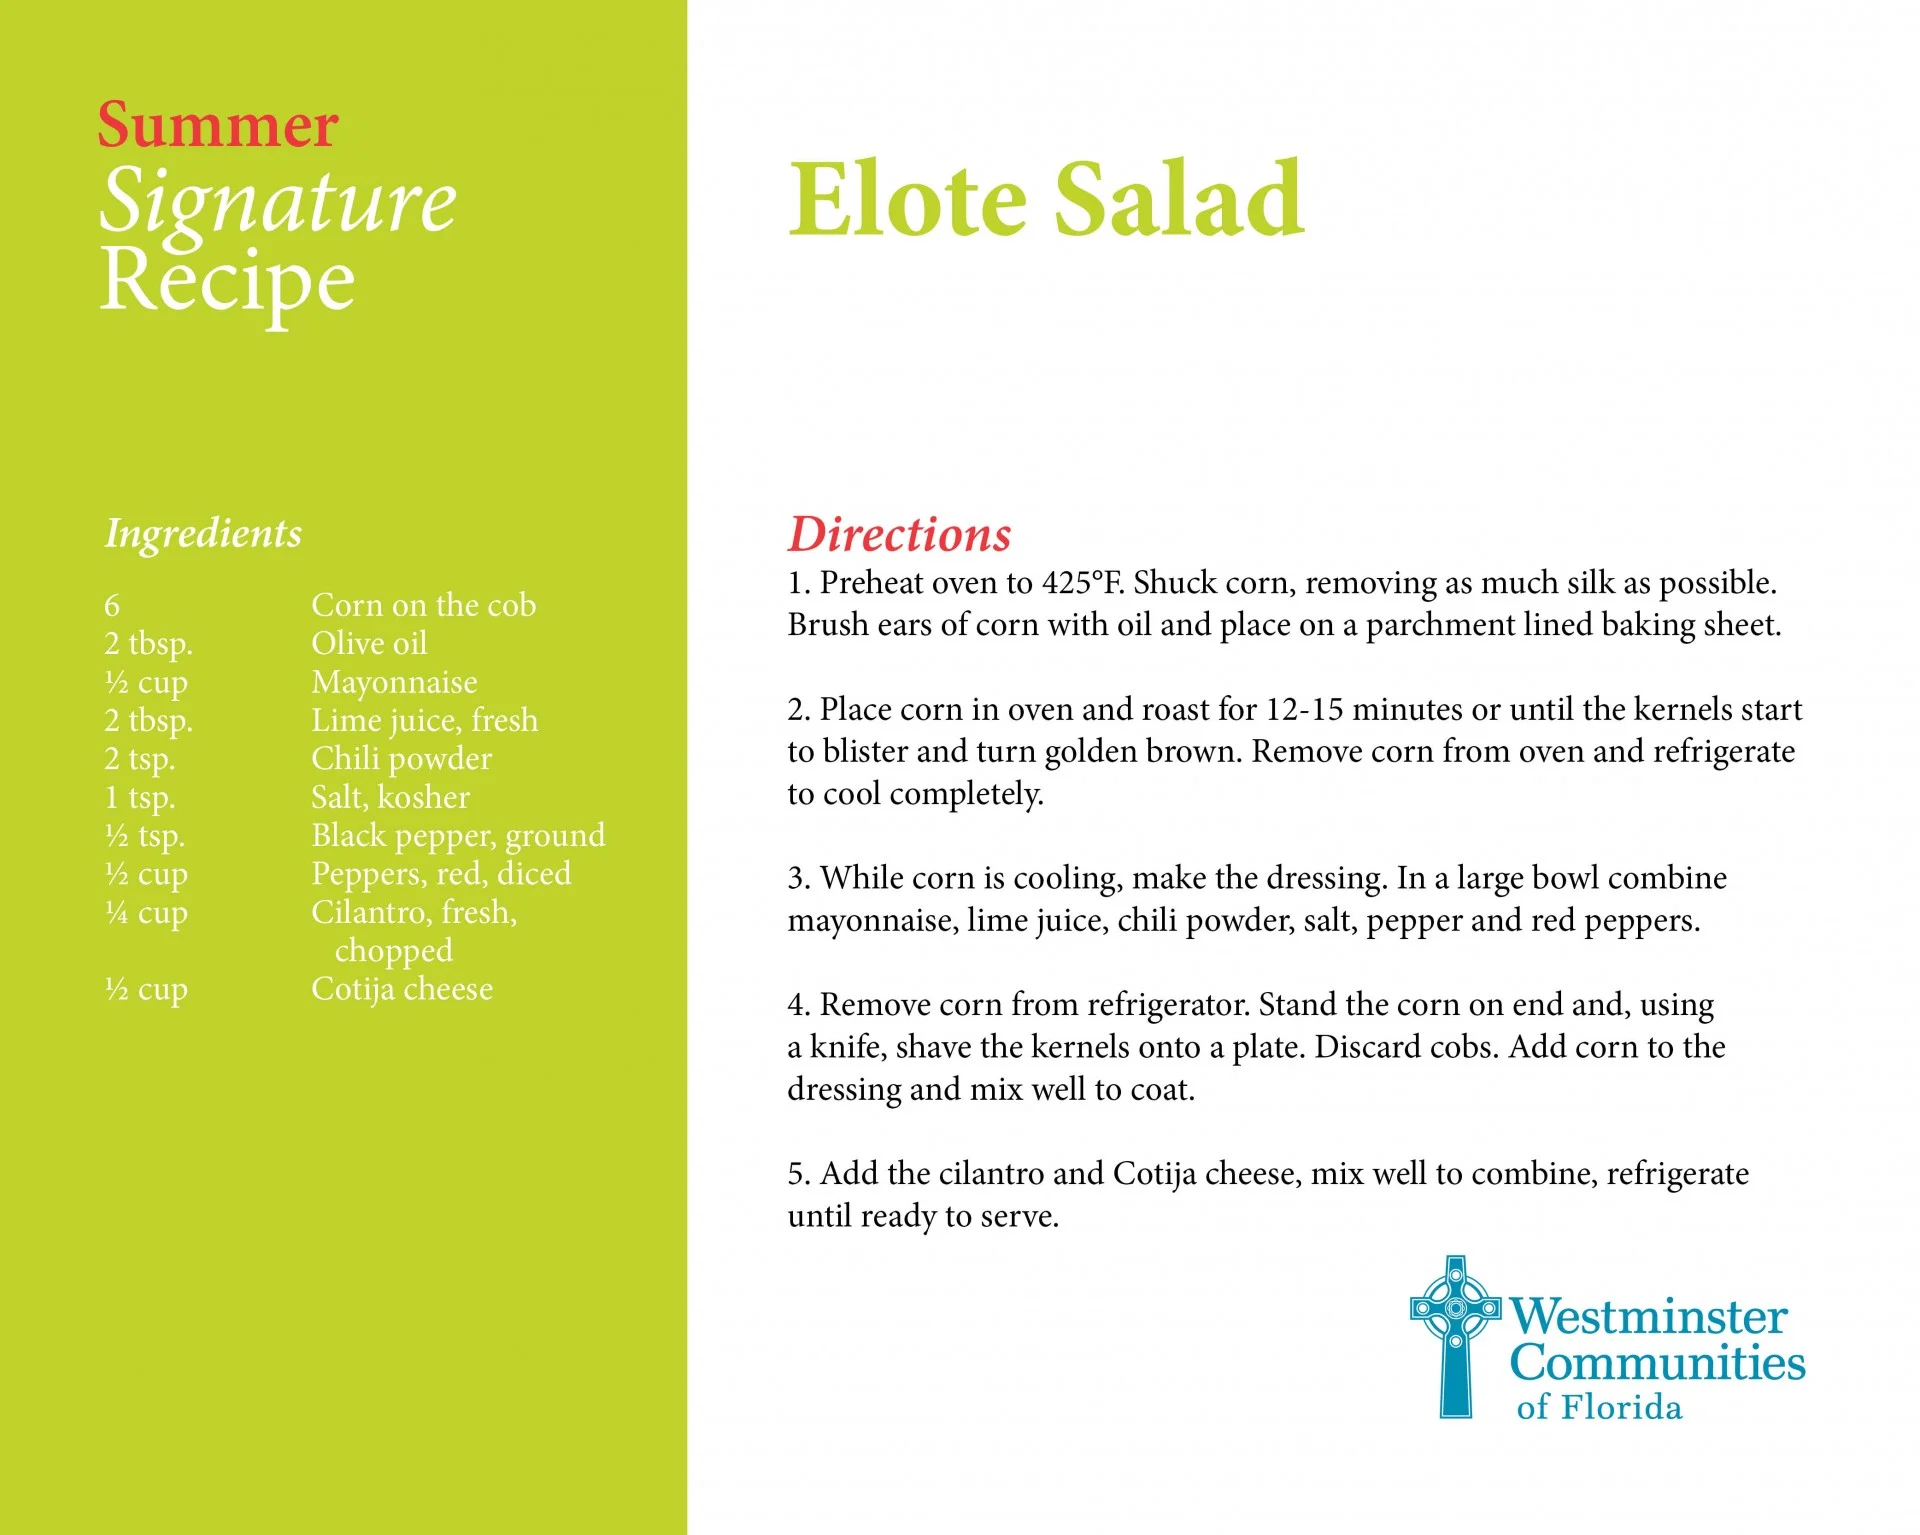 Our Signature Elote Salad